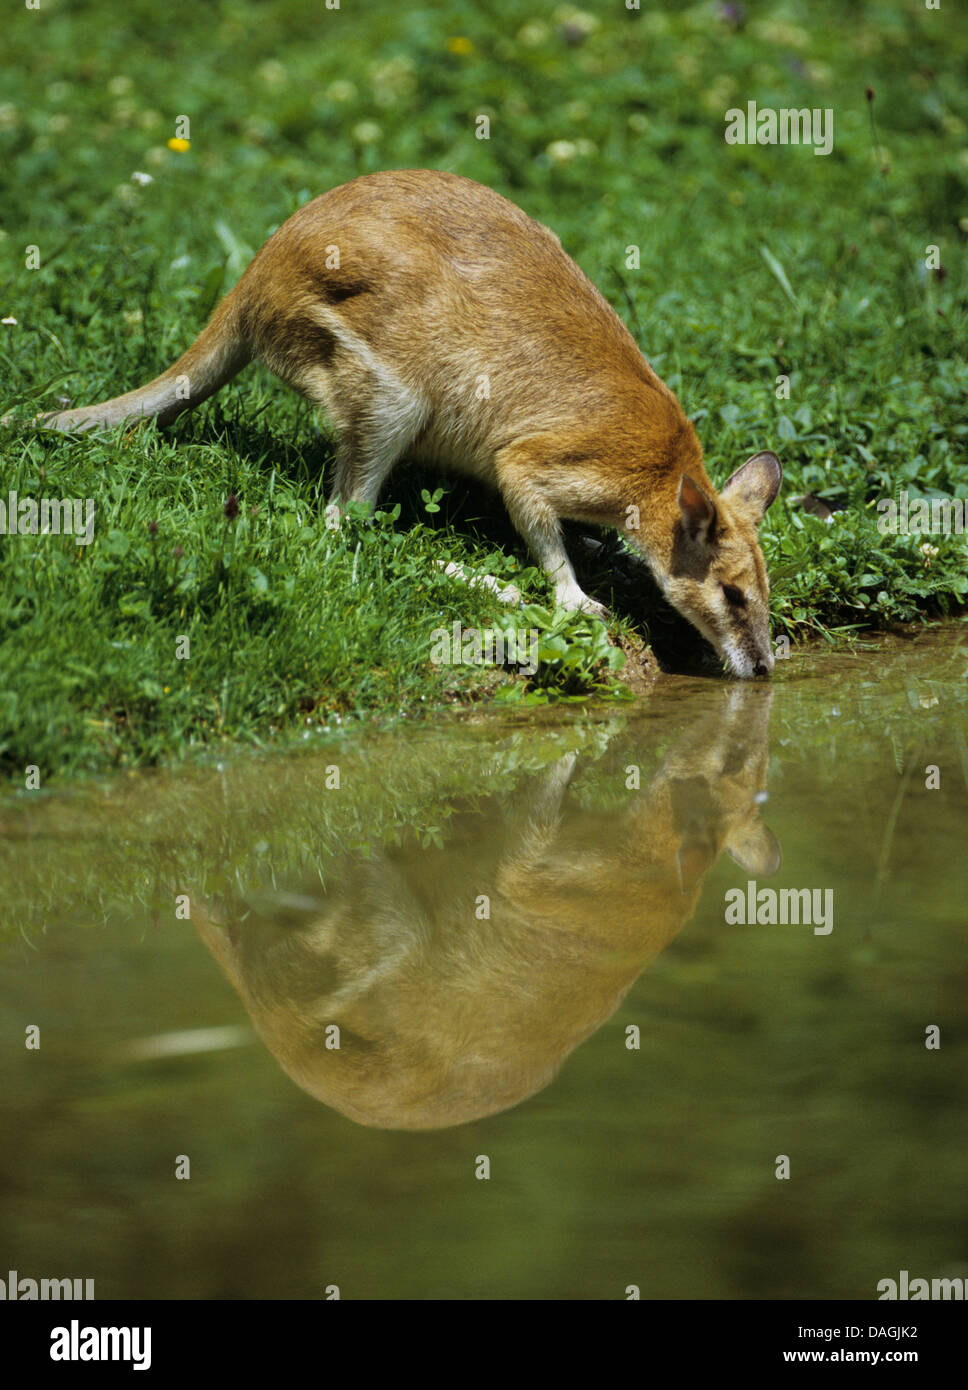 Agile wallaby, Sandy wallaby (Macropus agilis, Wallabia agilis), acqua potabile, Australia Foto Stock